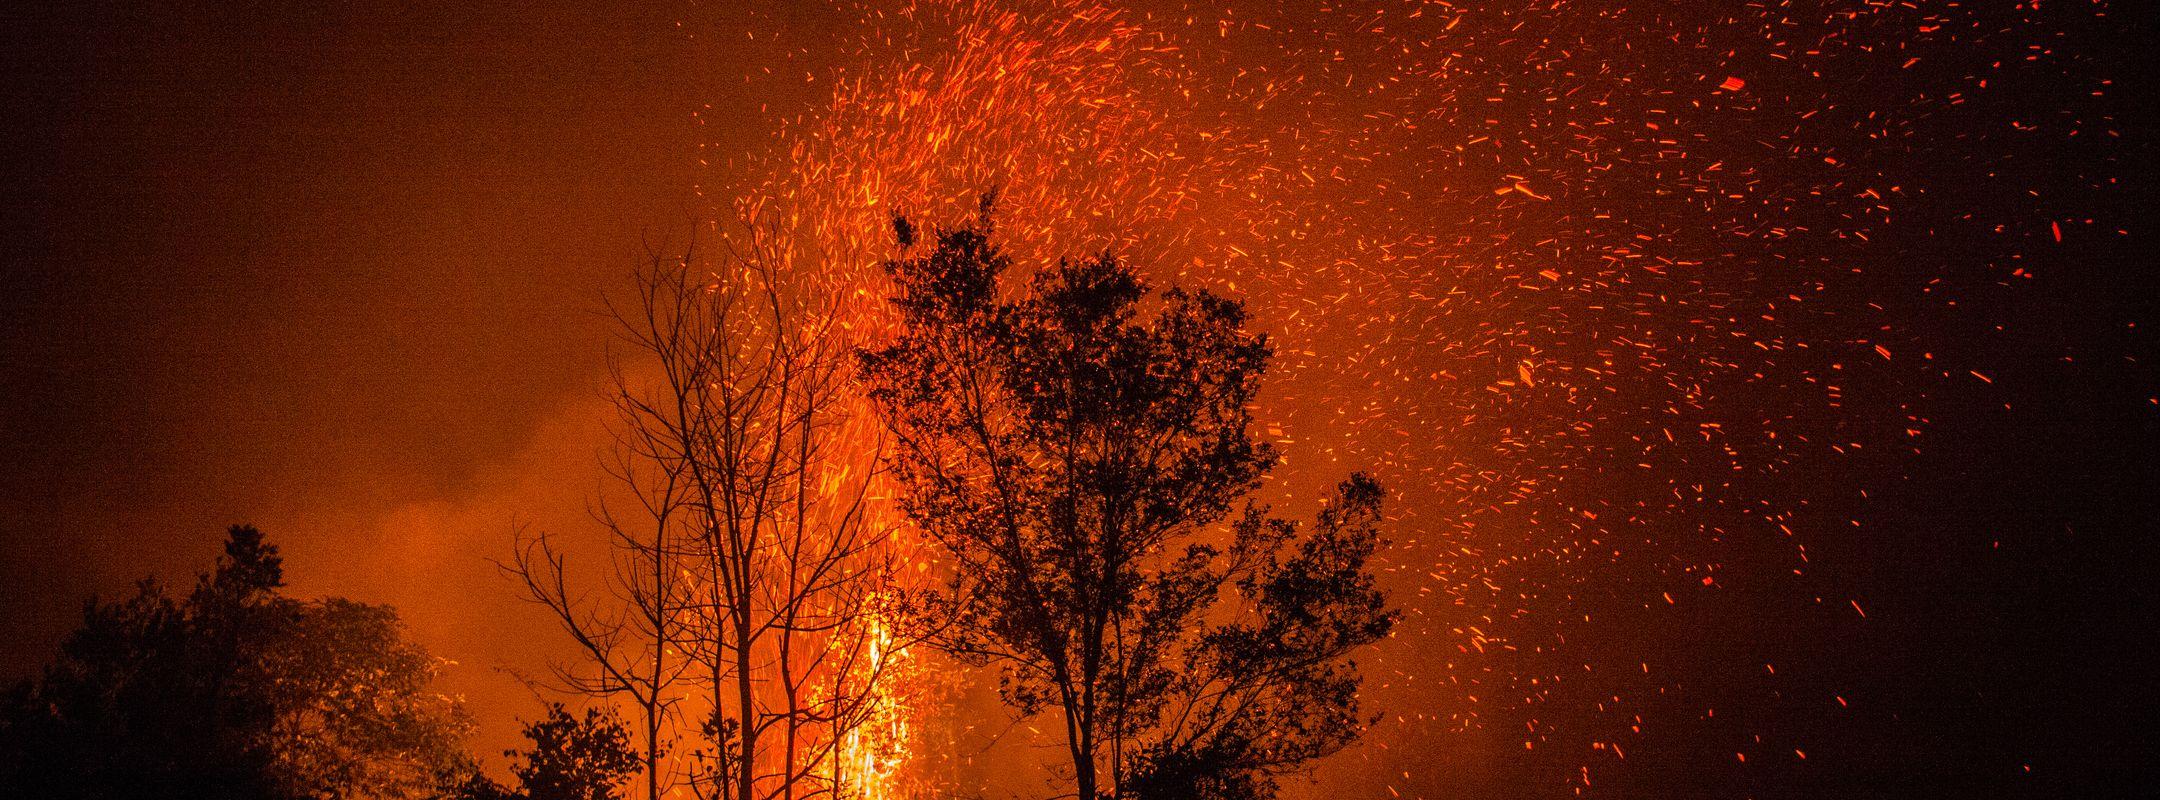 Forest Fires in Central Kalimantan